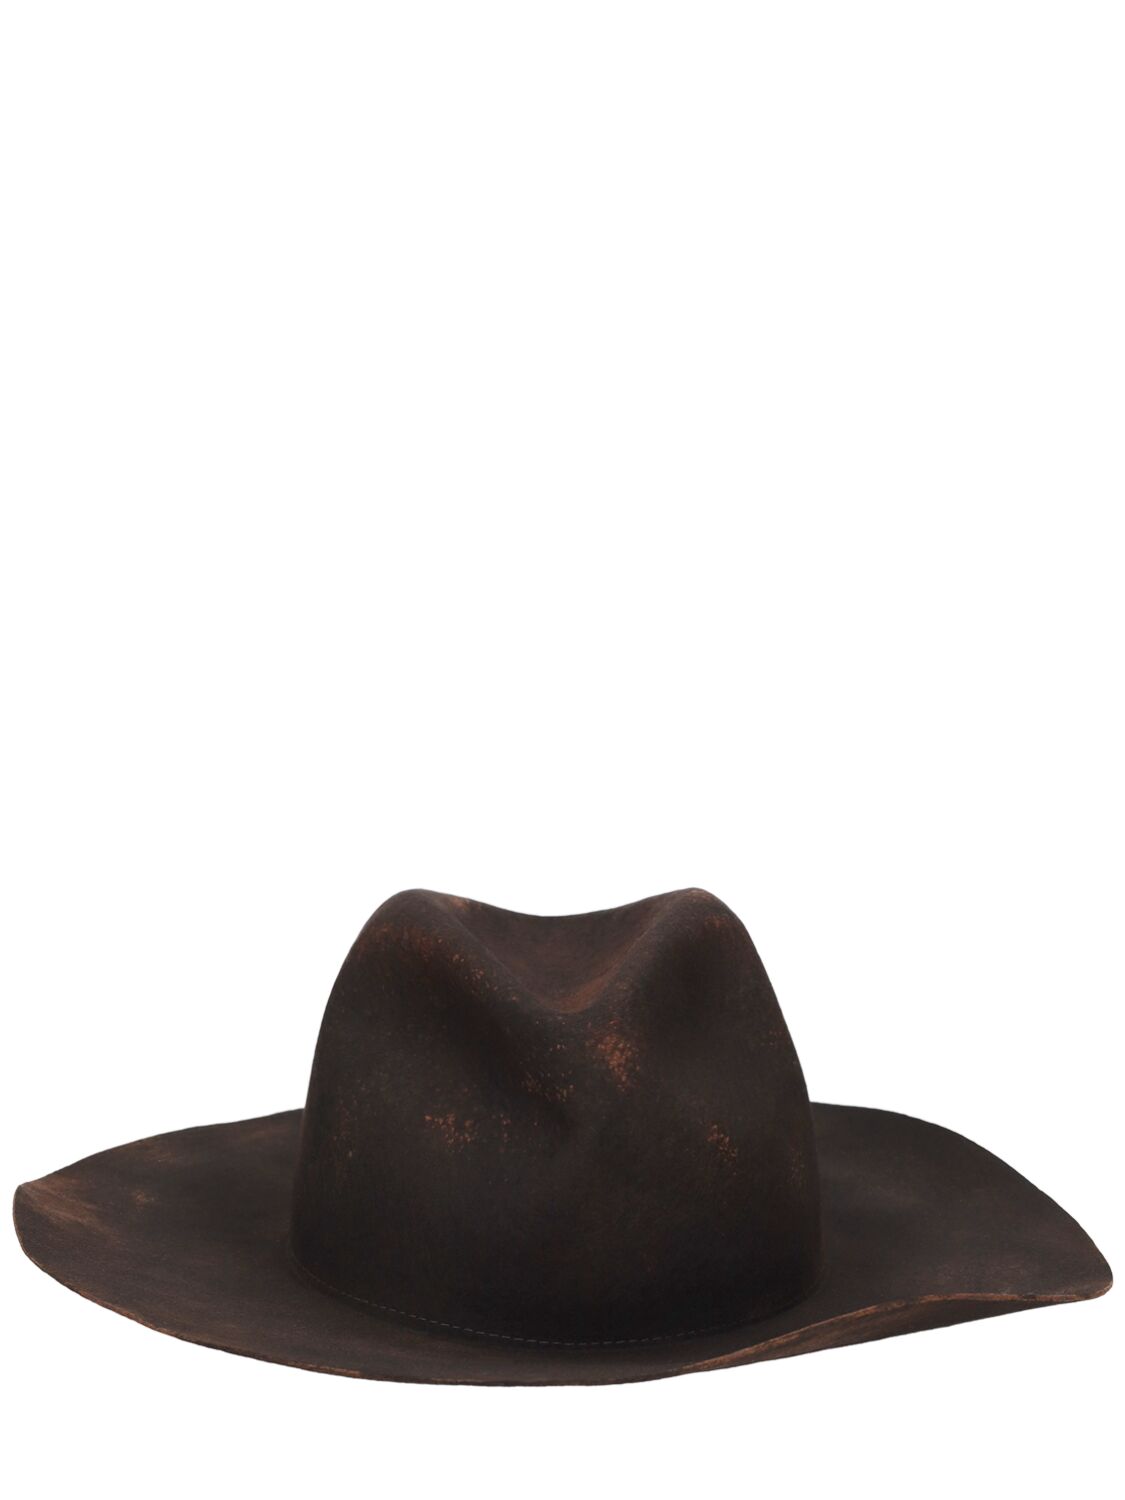 Image of Wool Fedora Hat